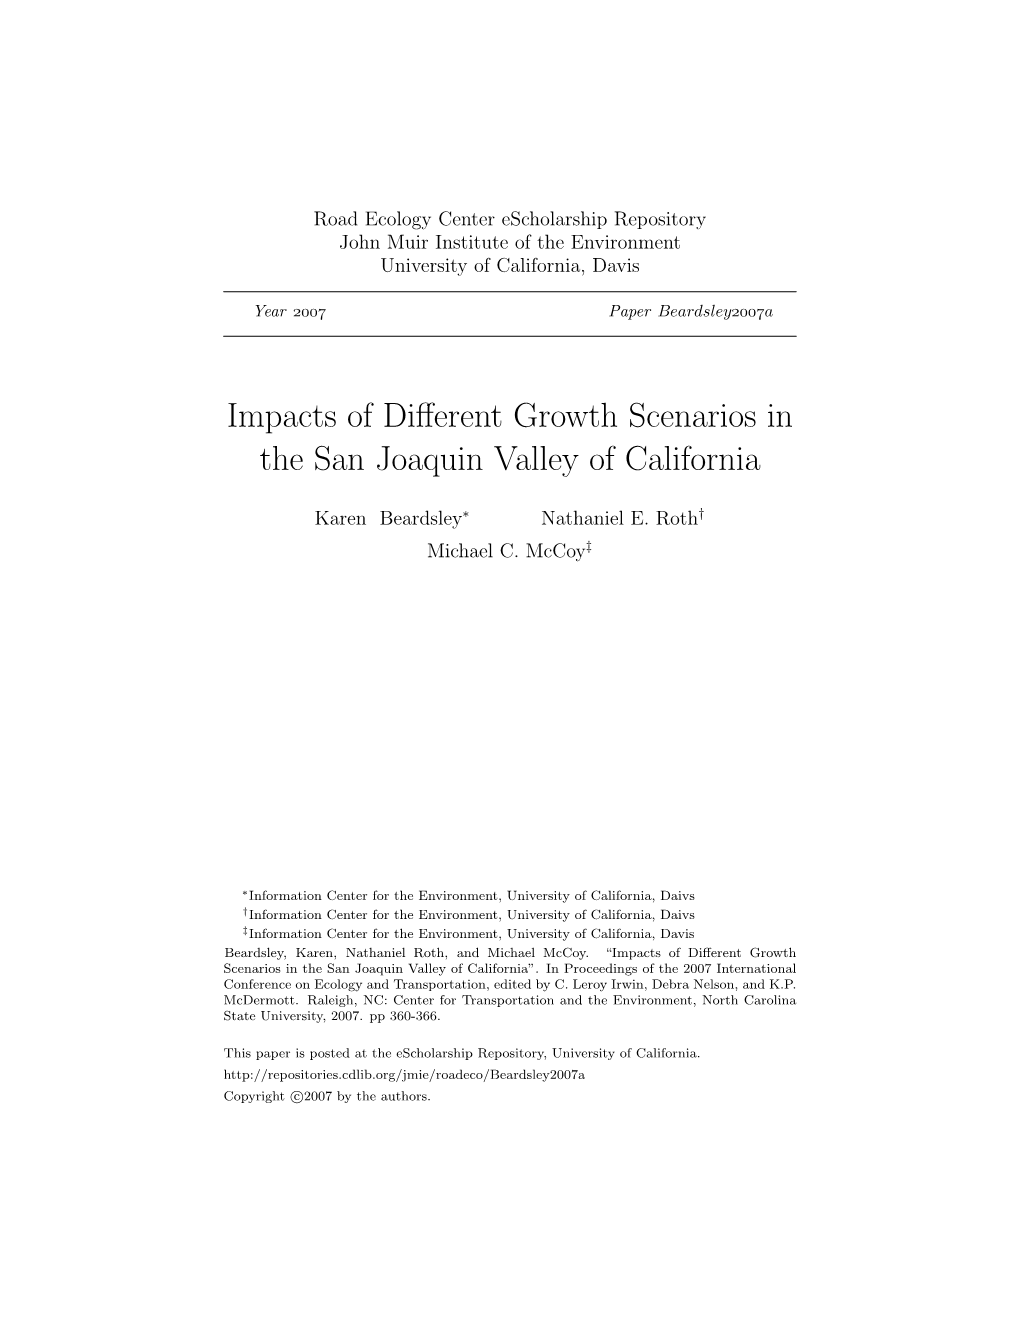 Impacts of Different Growth Scenarios in the San Joaquin Valley of California Karen Beardsley (530-752-5678, Kbeardsley@Ucdavis.Edu), Nathaniel E